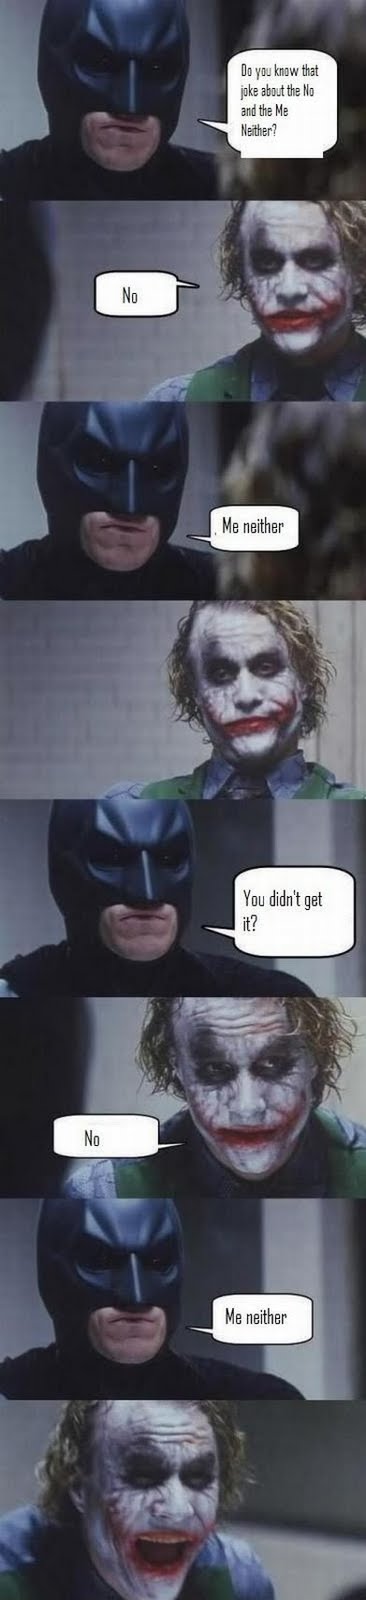 Joke About No And Me Neither - Batman - Joker